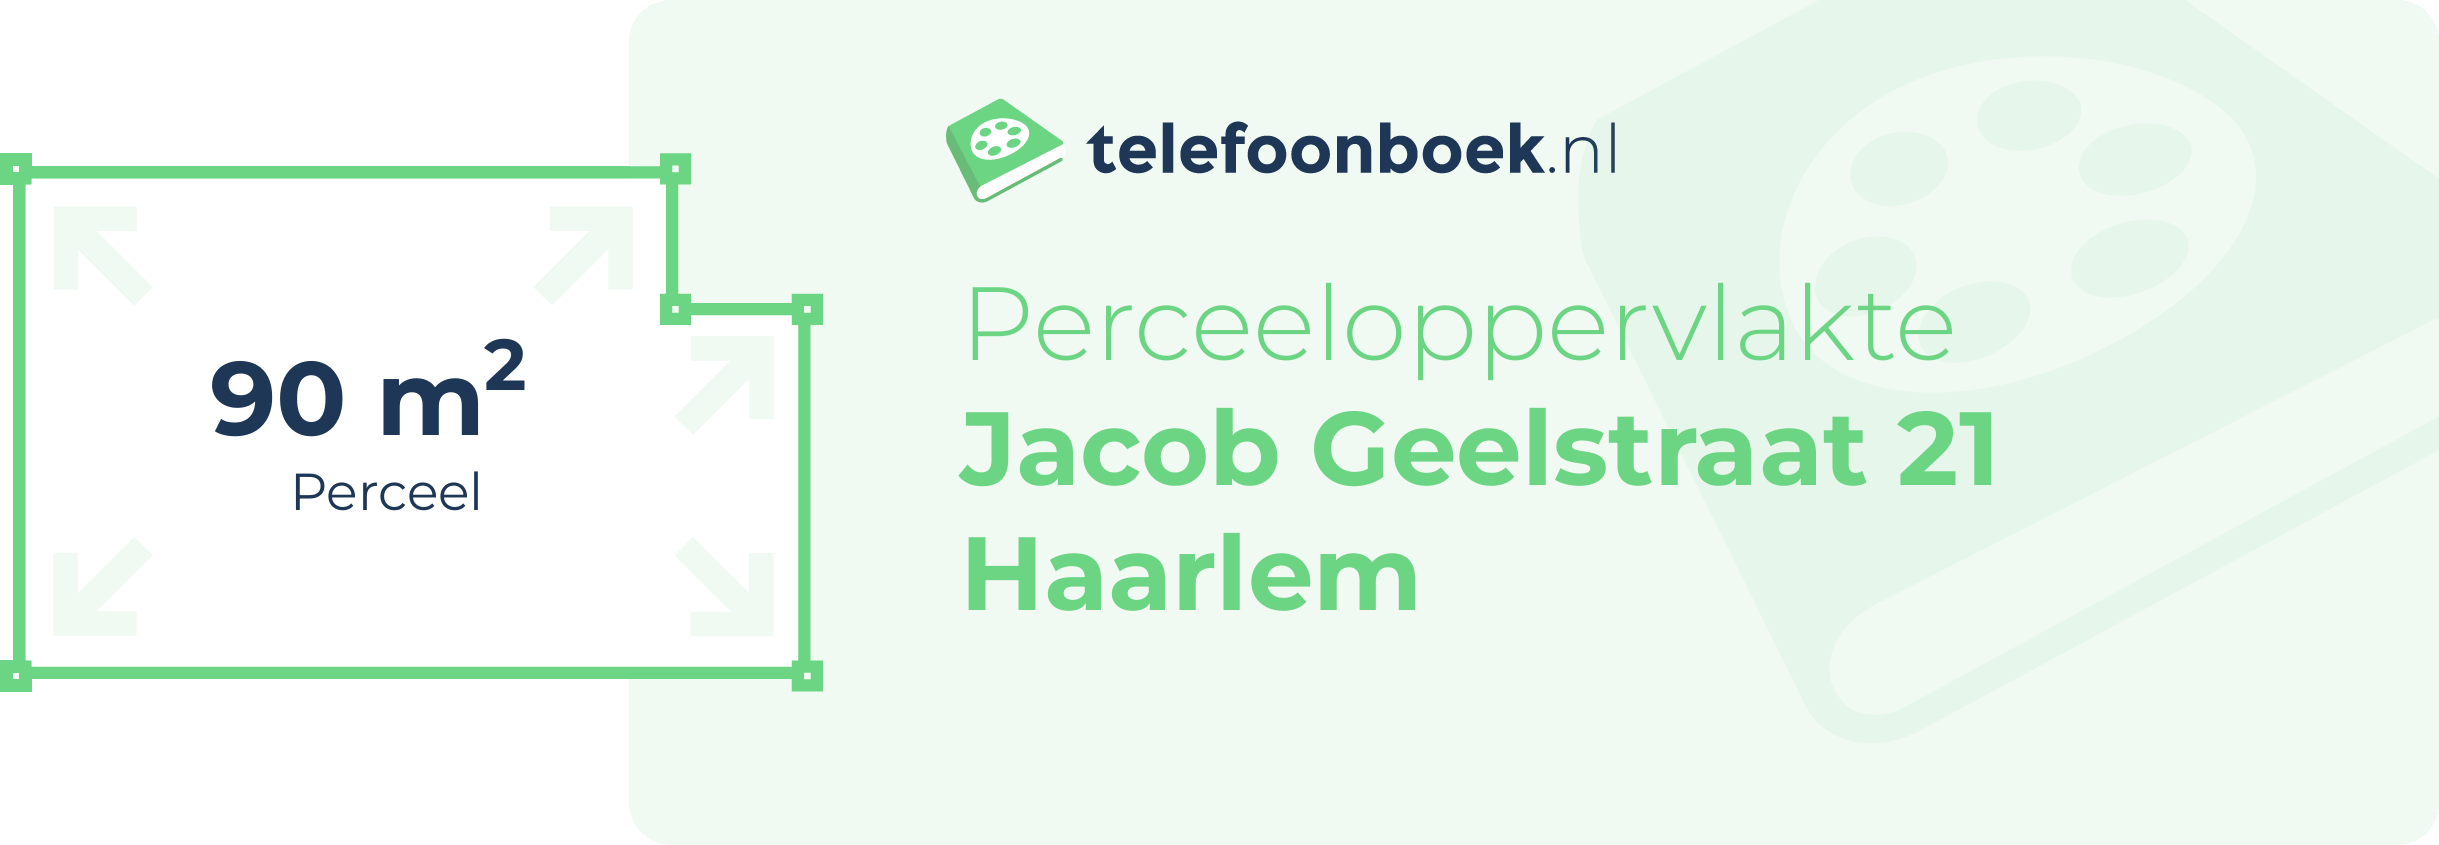 Perceeloppervlakte Jacob Geelstraat 21 Haarlem